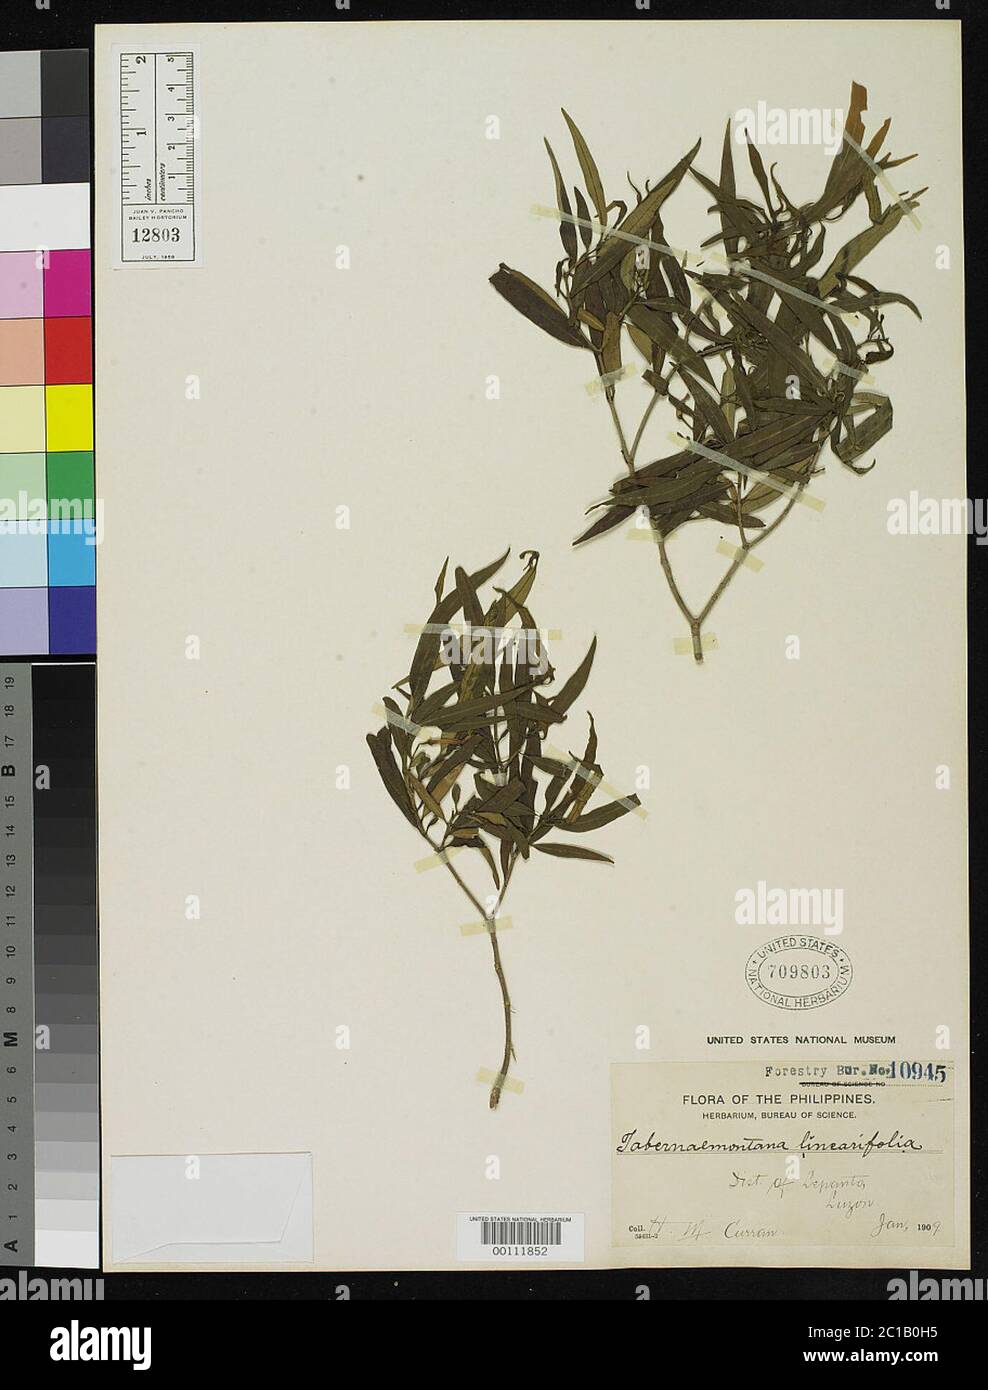 Tabernaemontana linearifolia Merr Tabernaemontana linearifolia Merr. Stock Photo